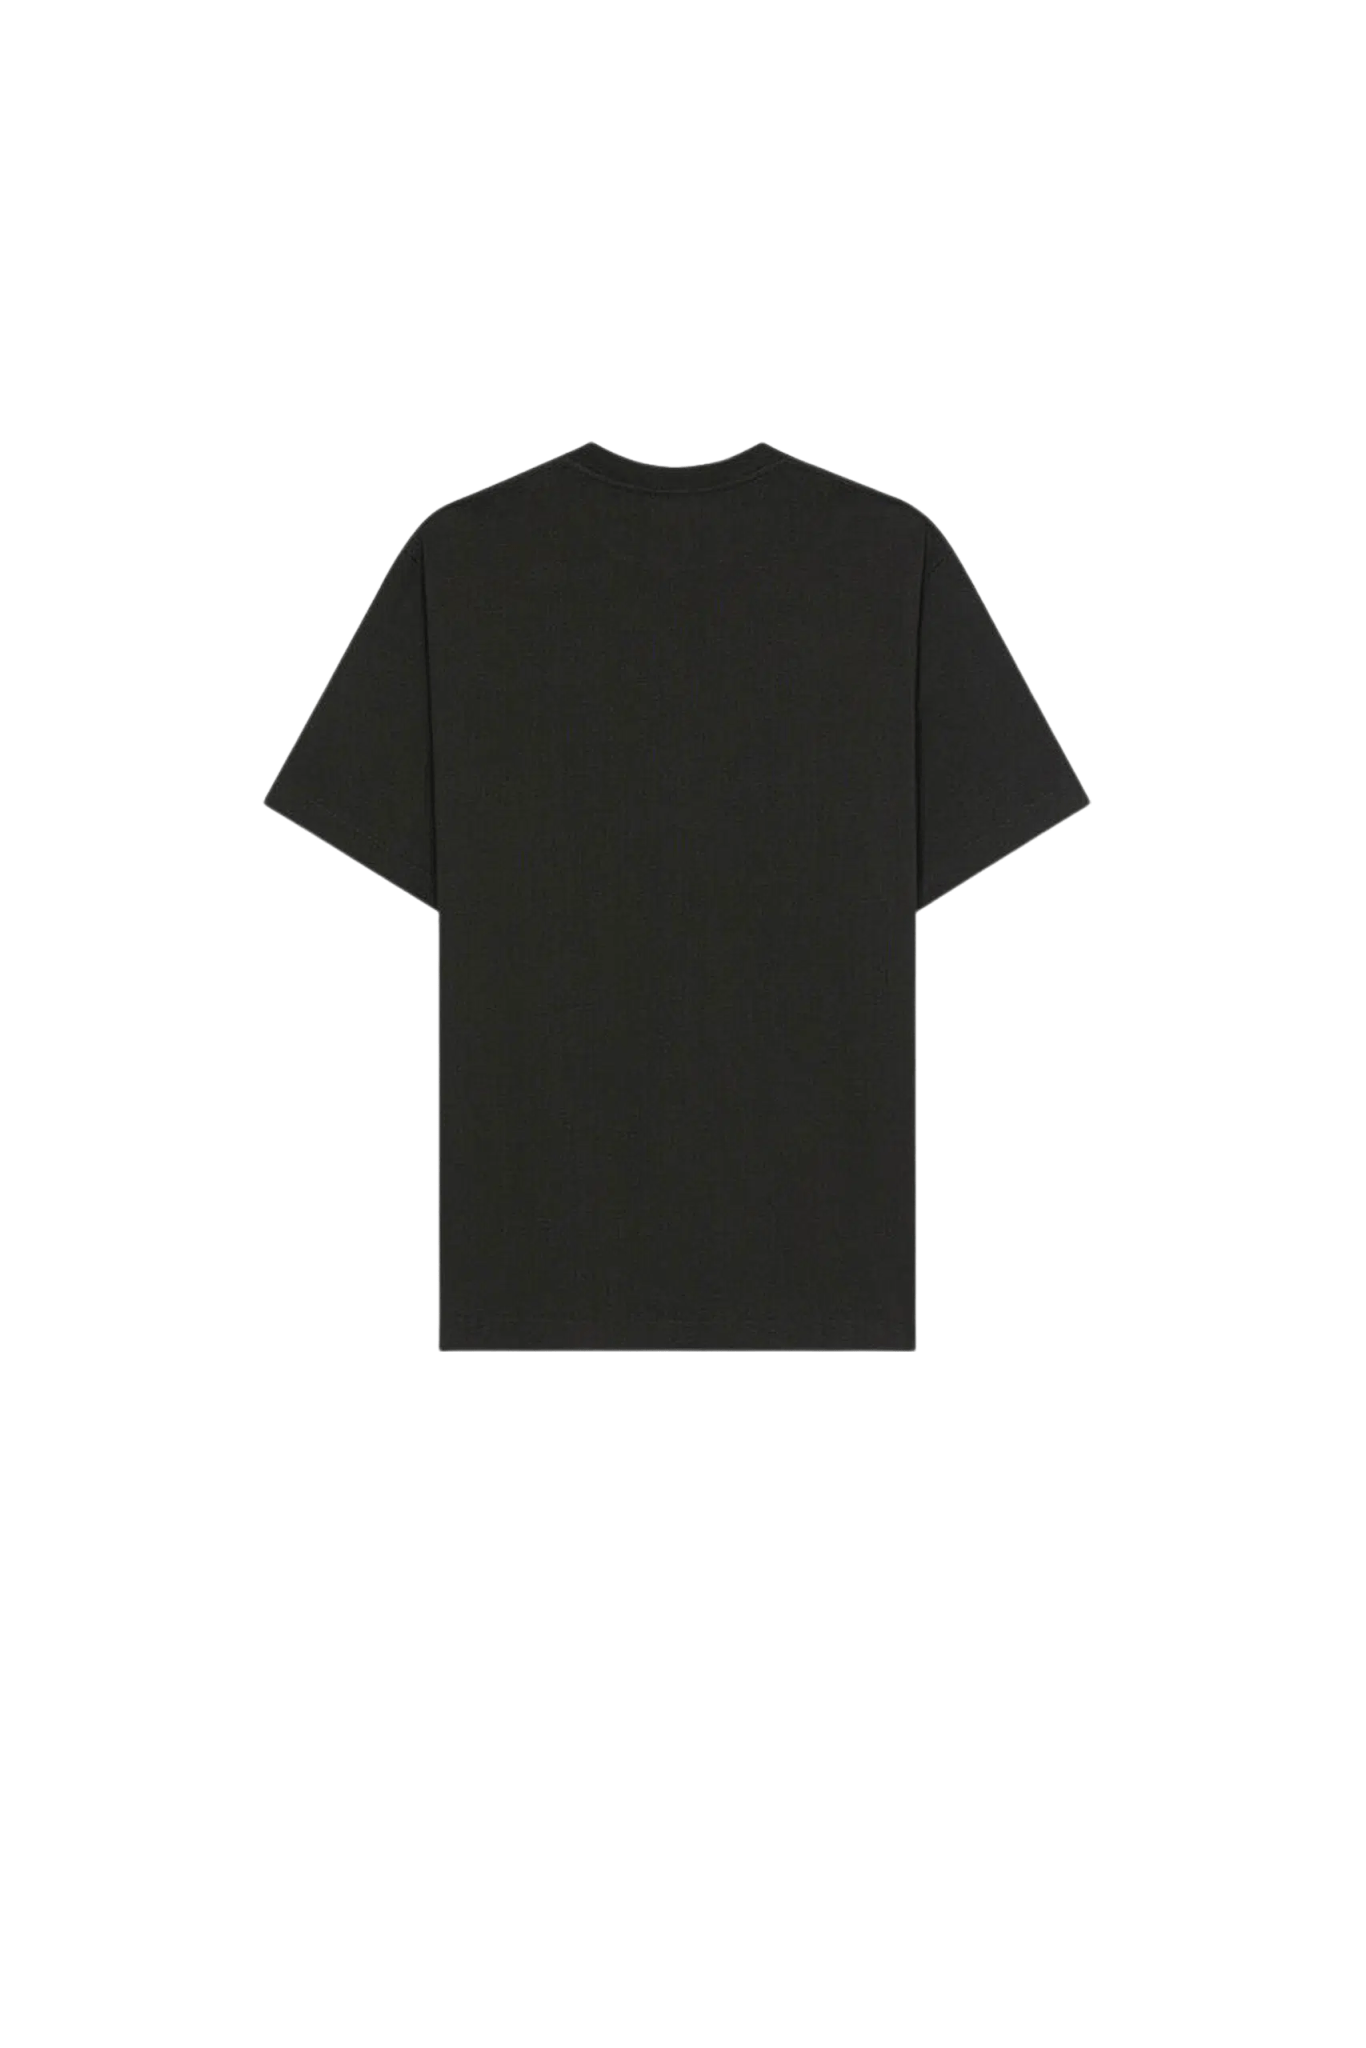 T-Shirt Kenzo Paris - Urban Clothing